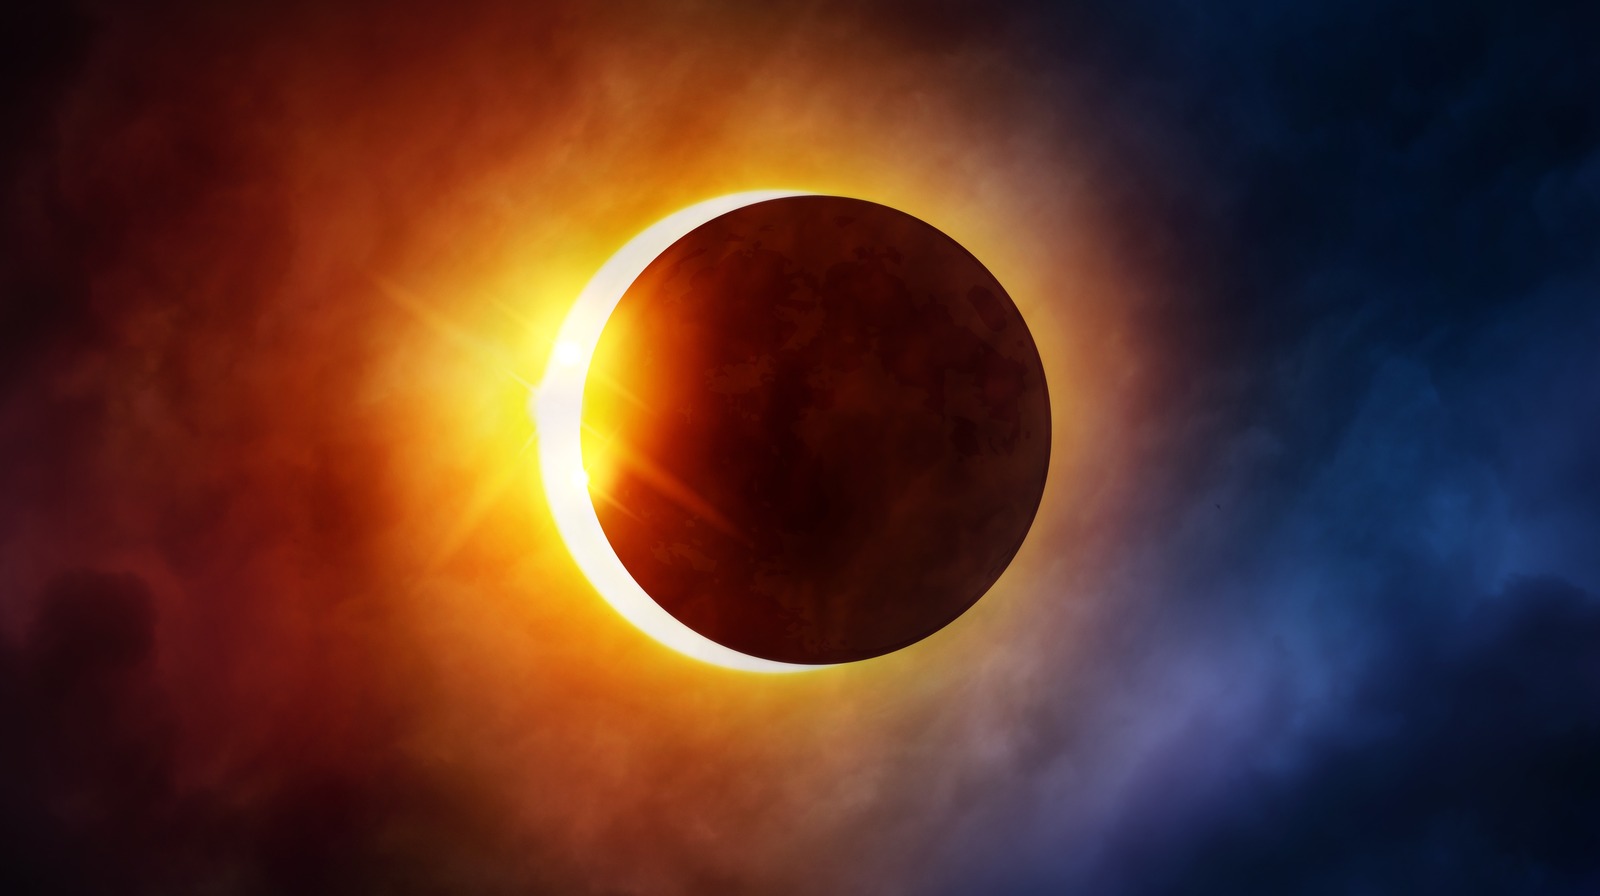 He aquí por qué no deberías mirar directamente un eclipse solar